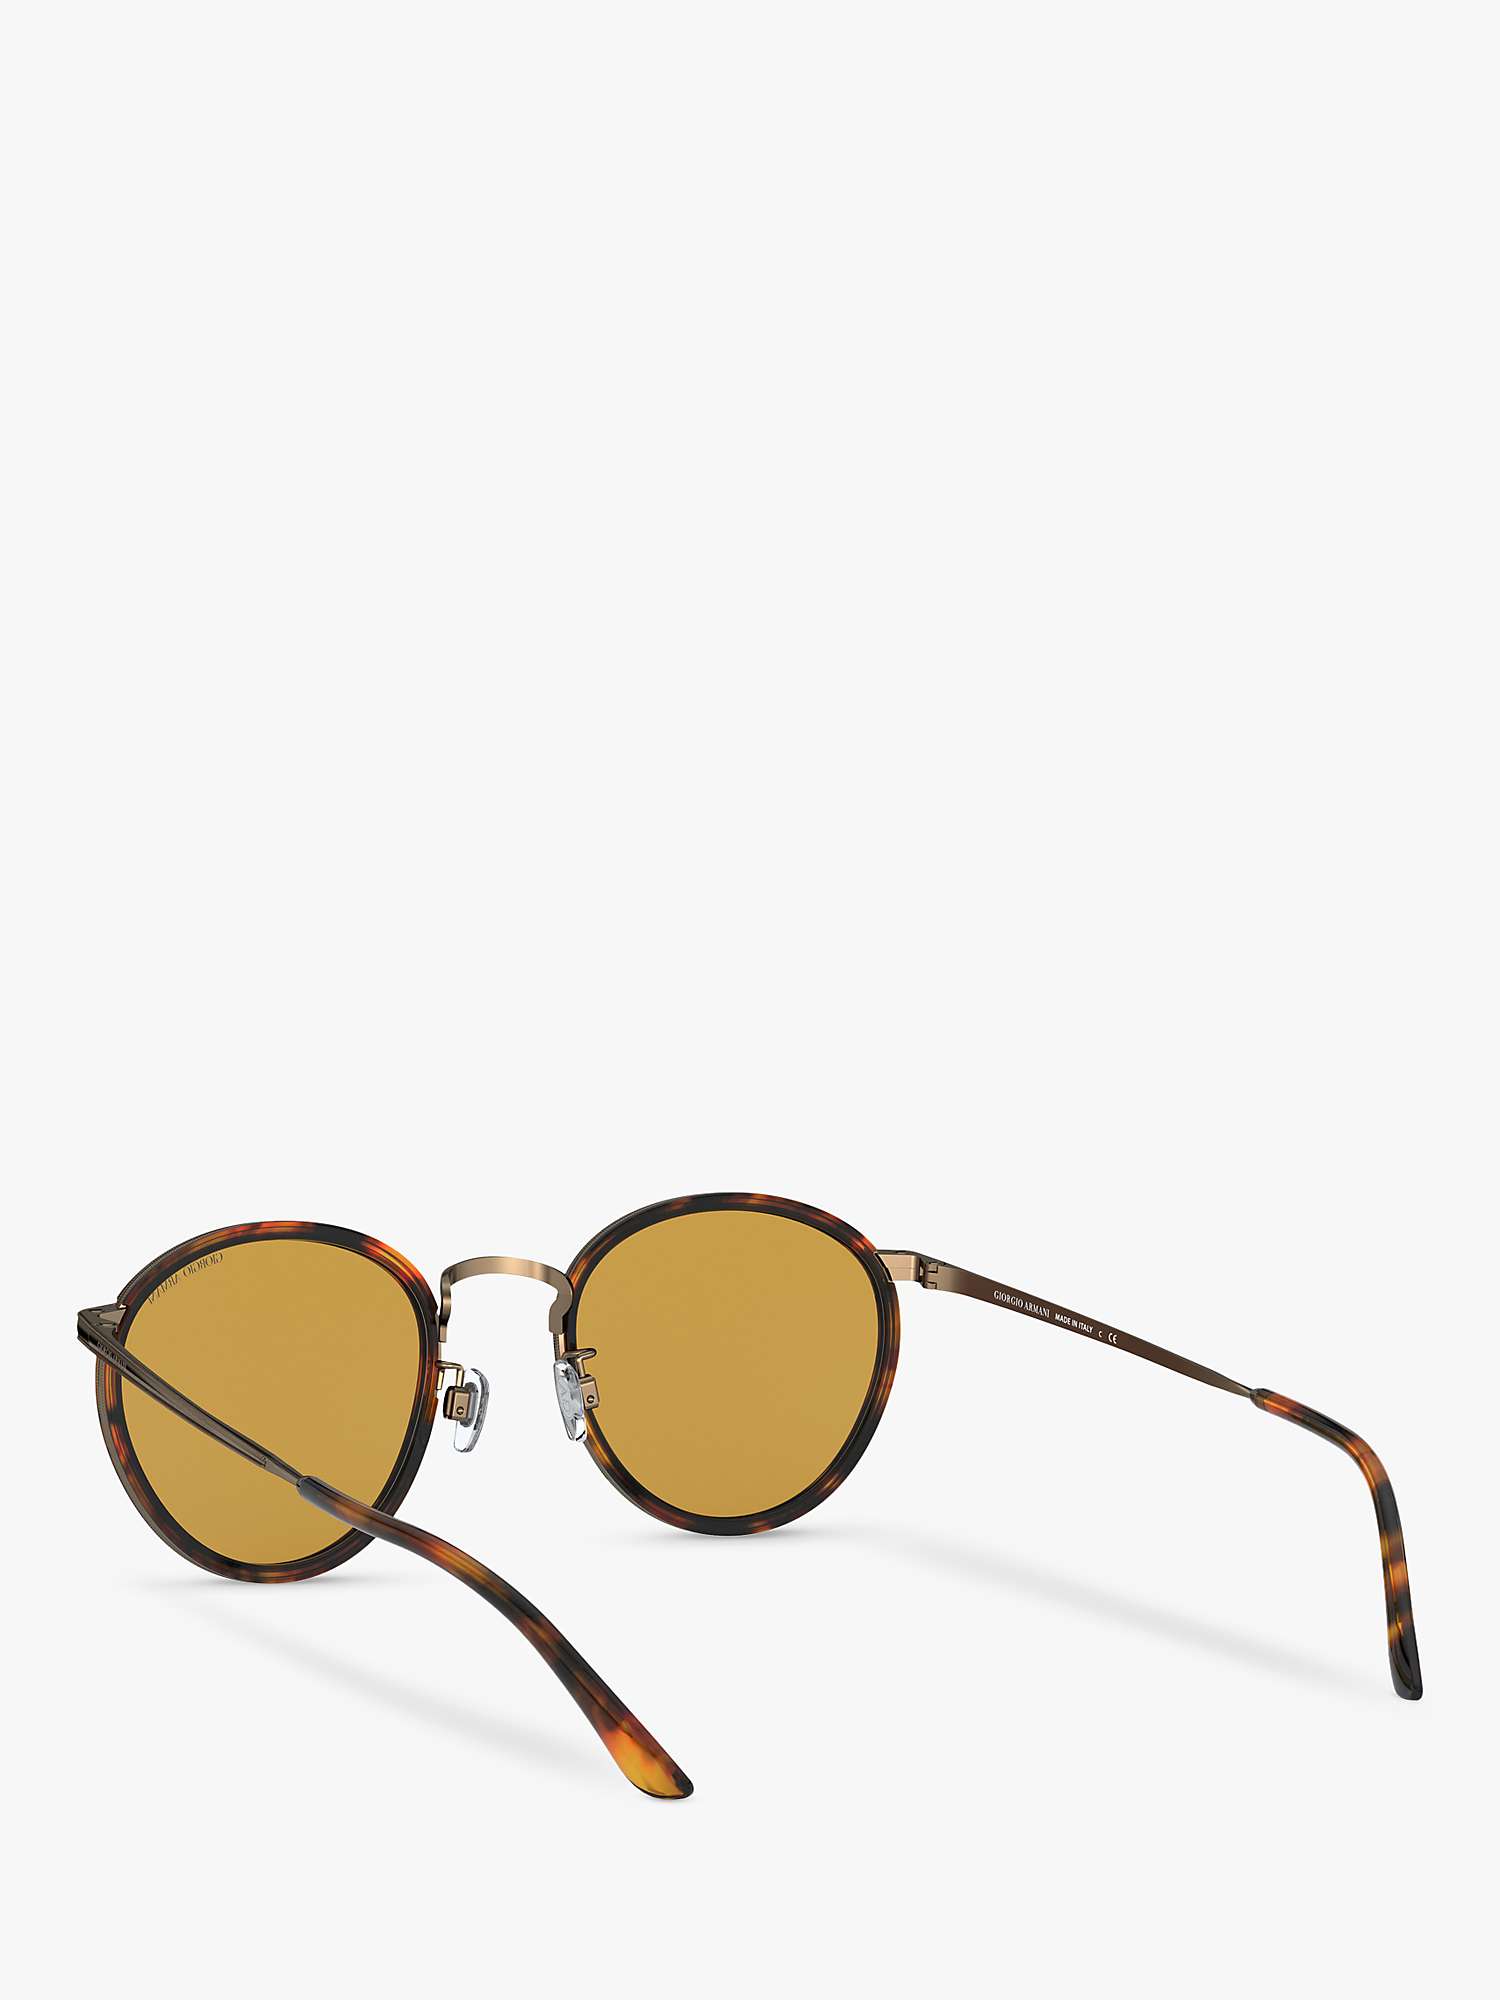 Buy Armani Exchange AR 101M Men's Round Sunglasses, Havana/Yellow Online at johnlewis.com